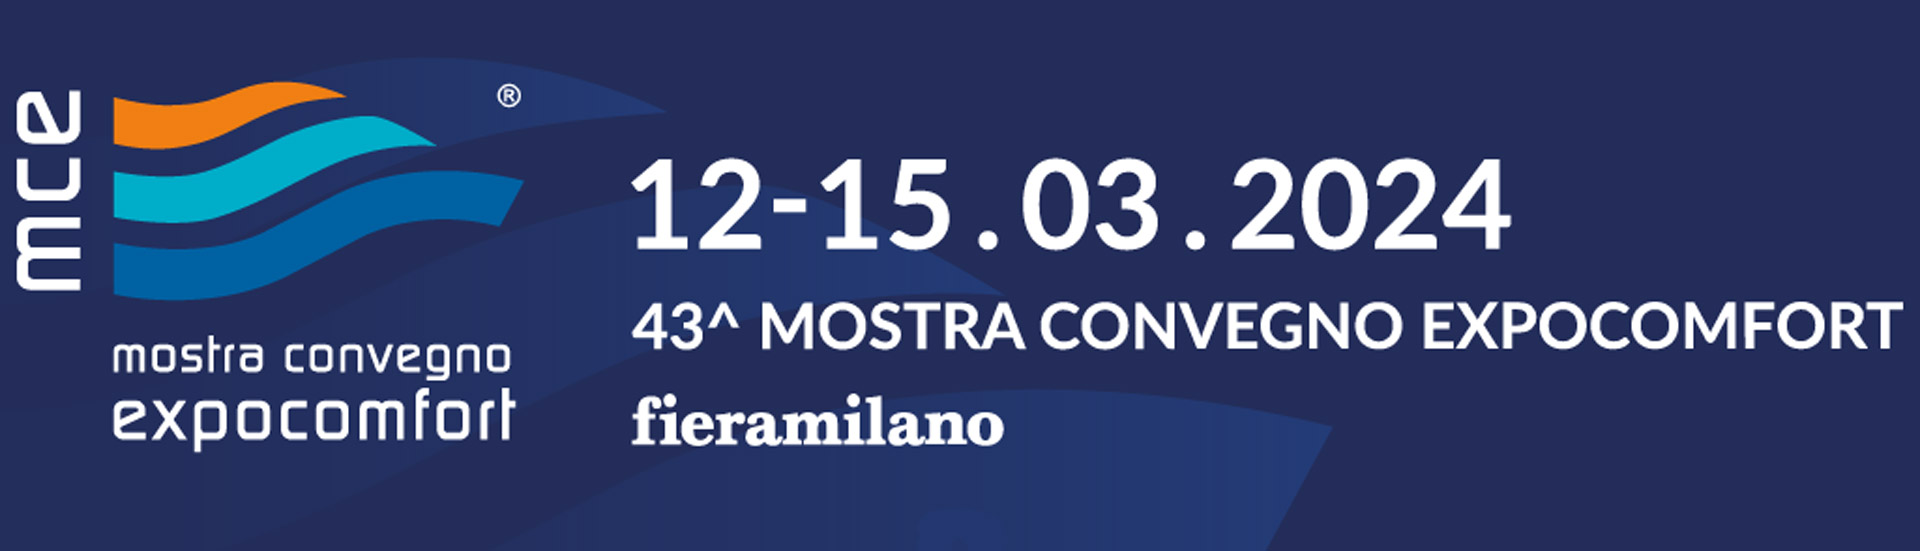 Beinat at the Mostra Convegno Expocomfort  (MCE) 2024